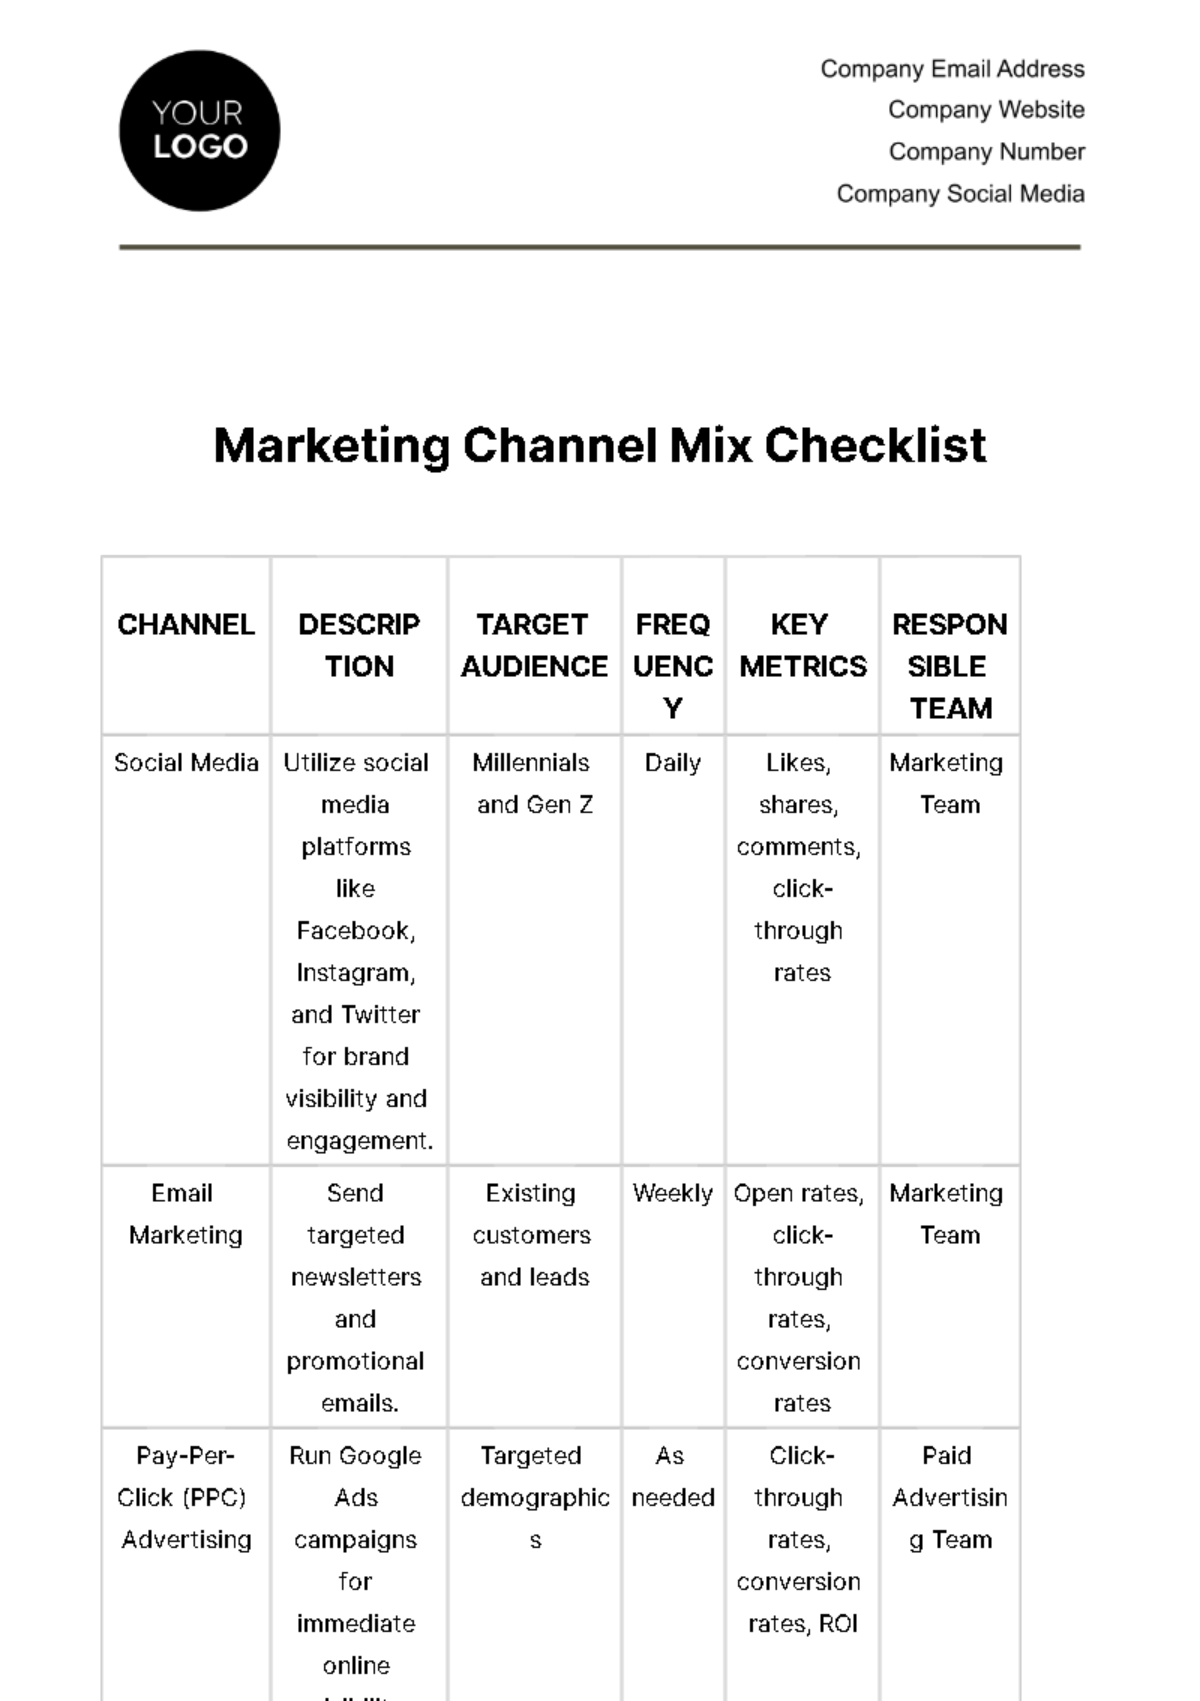 Marketing Channel Mix Checklist Template